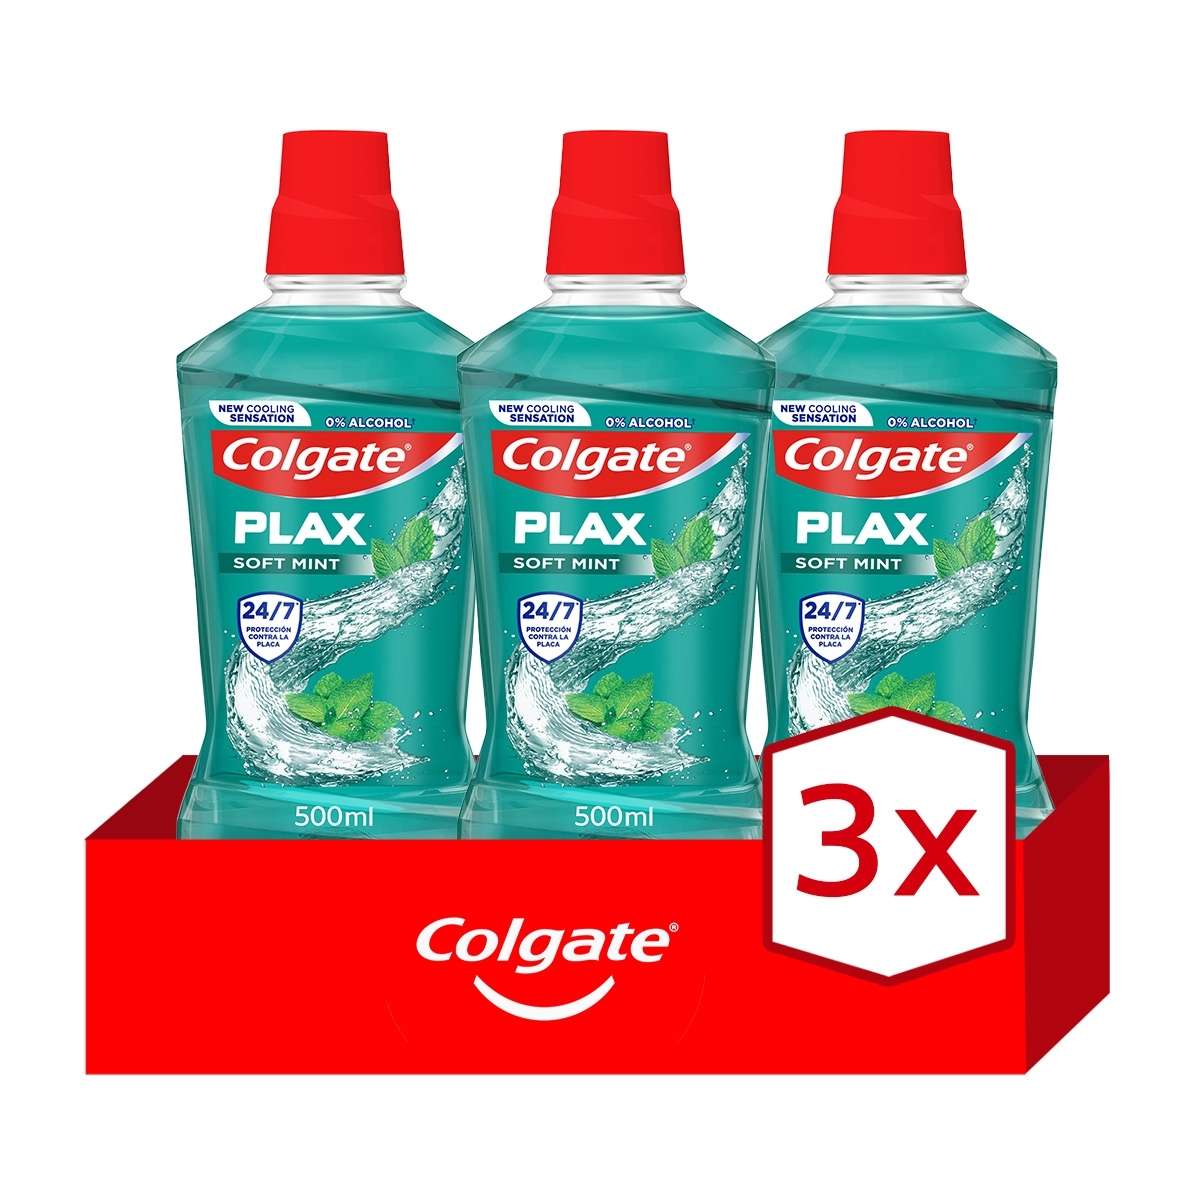 Colgate - Enjuague bucal Colgate Plax Soft Mint protección 24H, antibacteriano 500ml. Pack 3